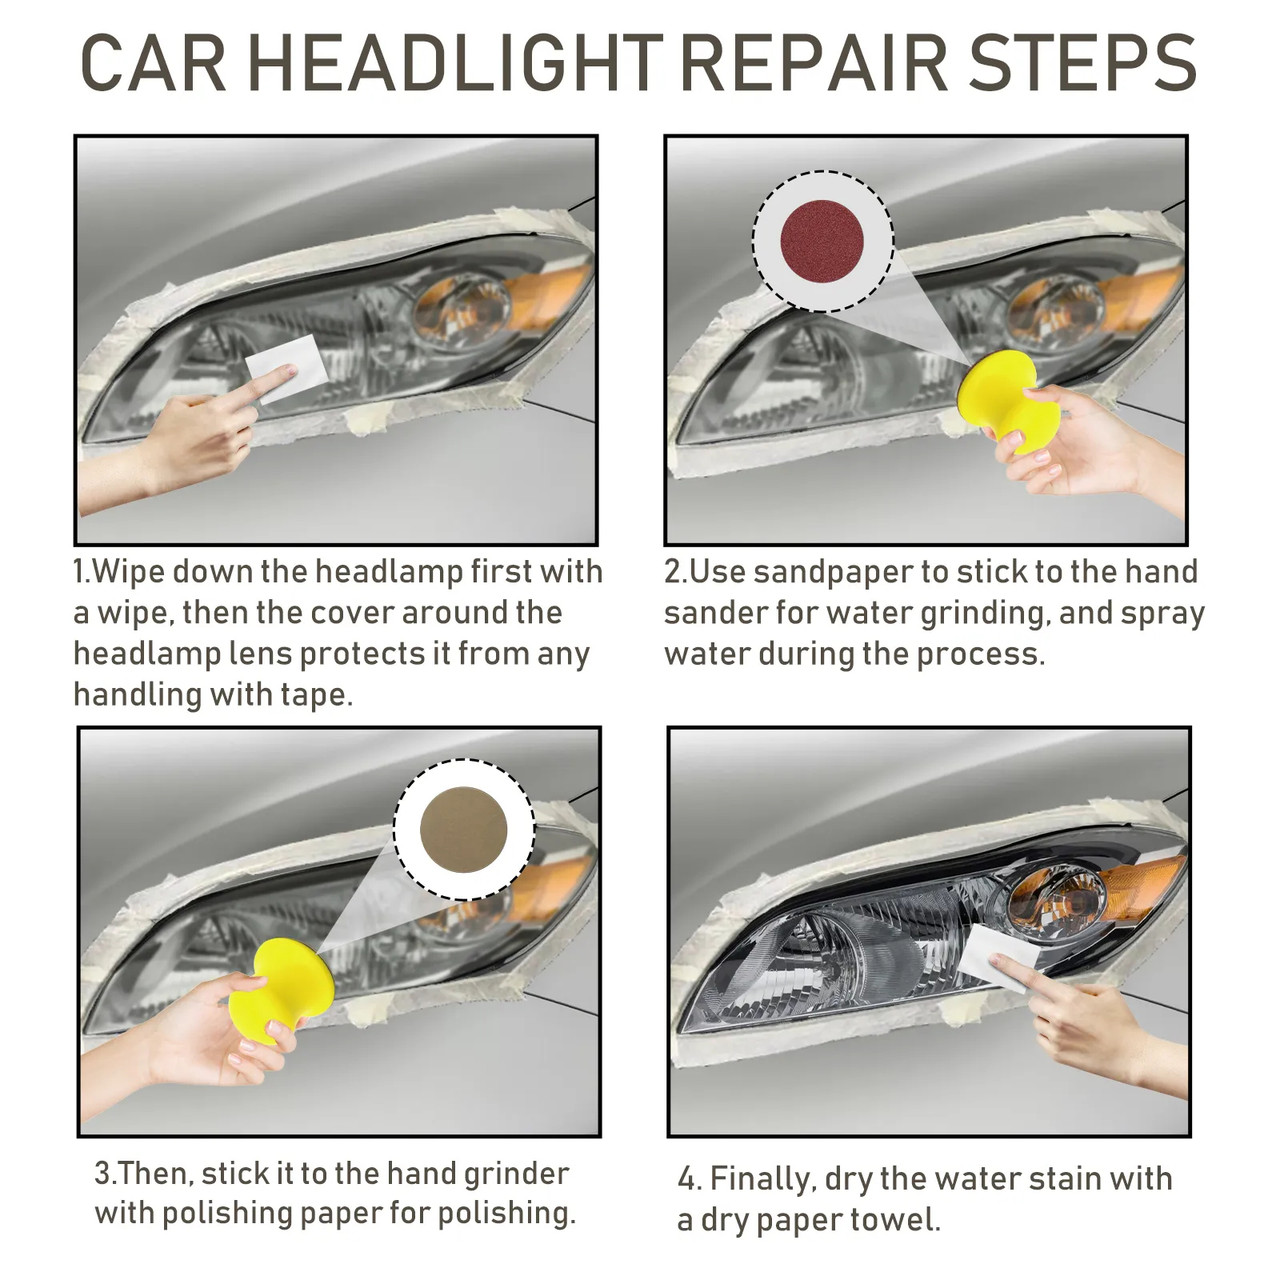 Headlight Restoration Kit Cleaning Powerful Headlight Repair Kit